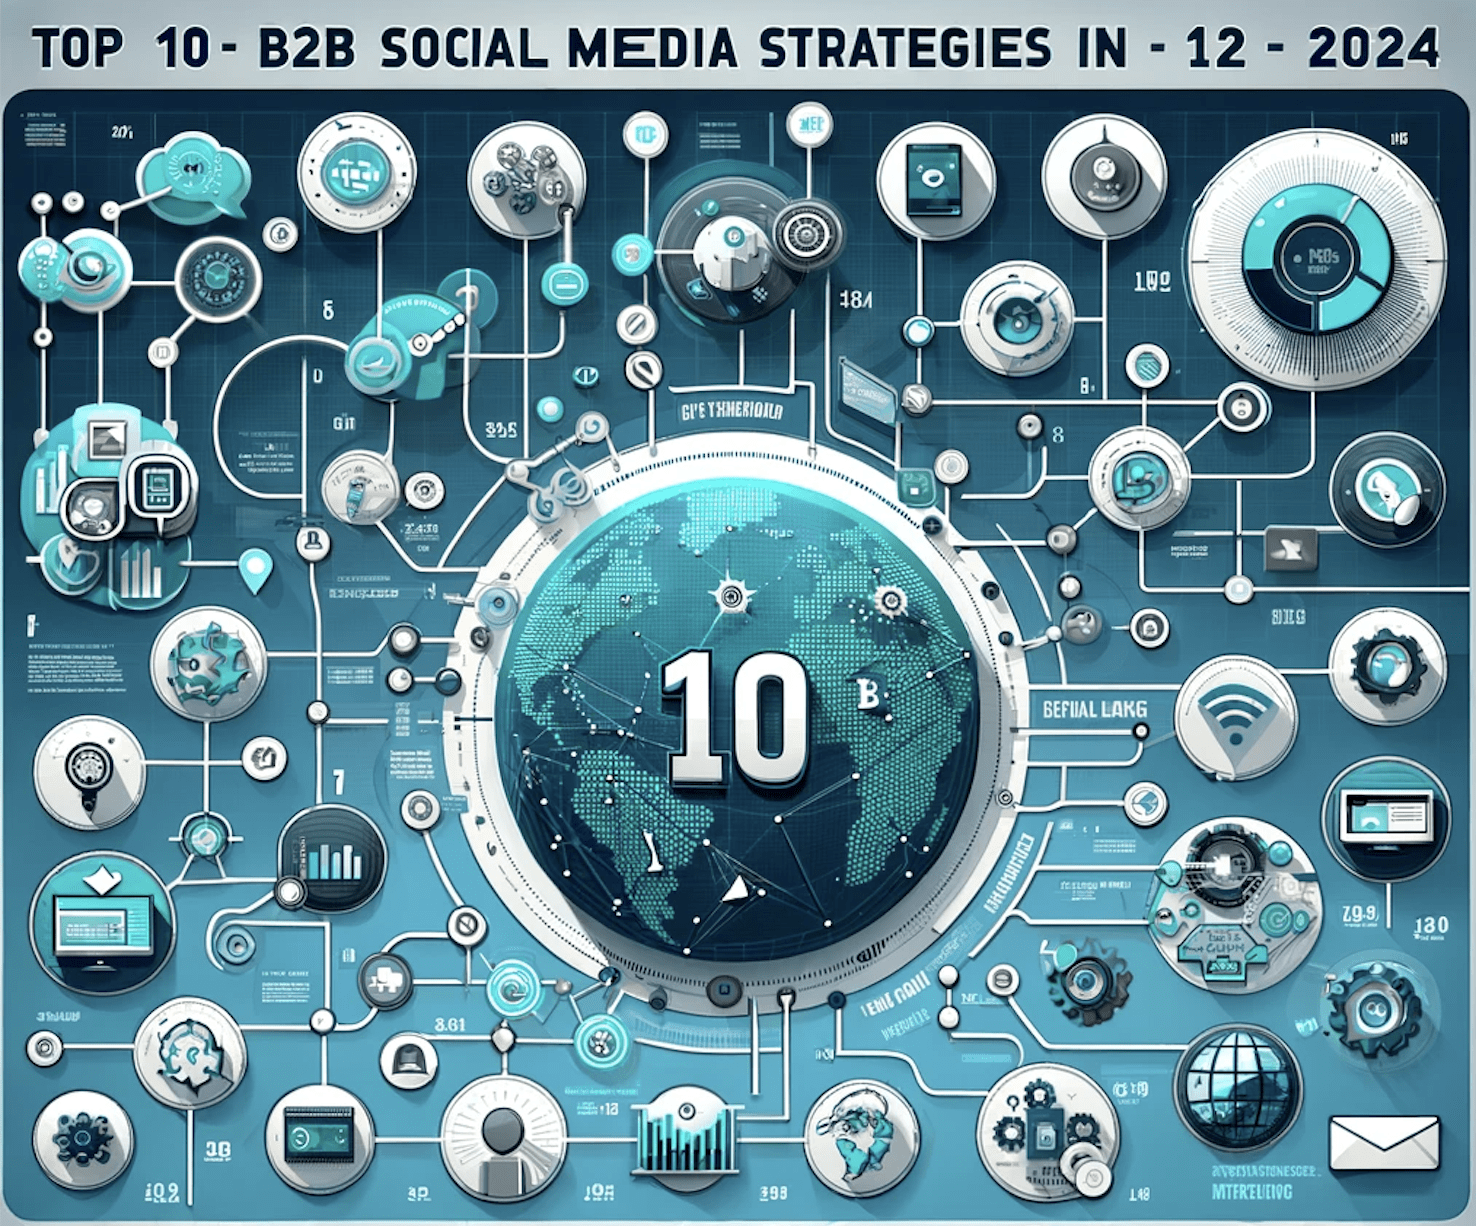 Top 10 B2B Social Media Strategies in 2024